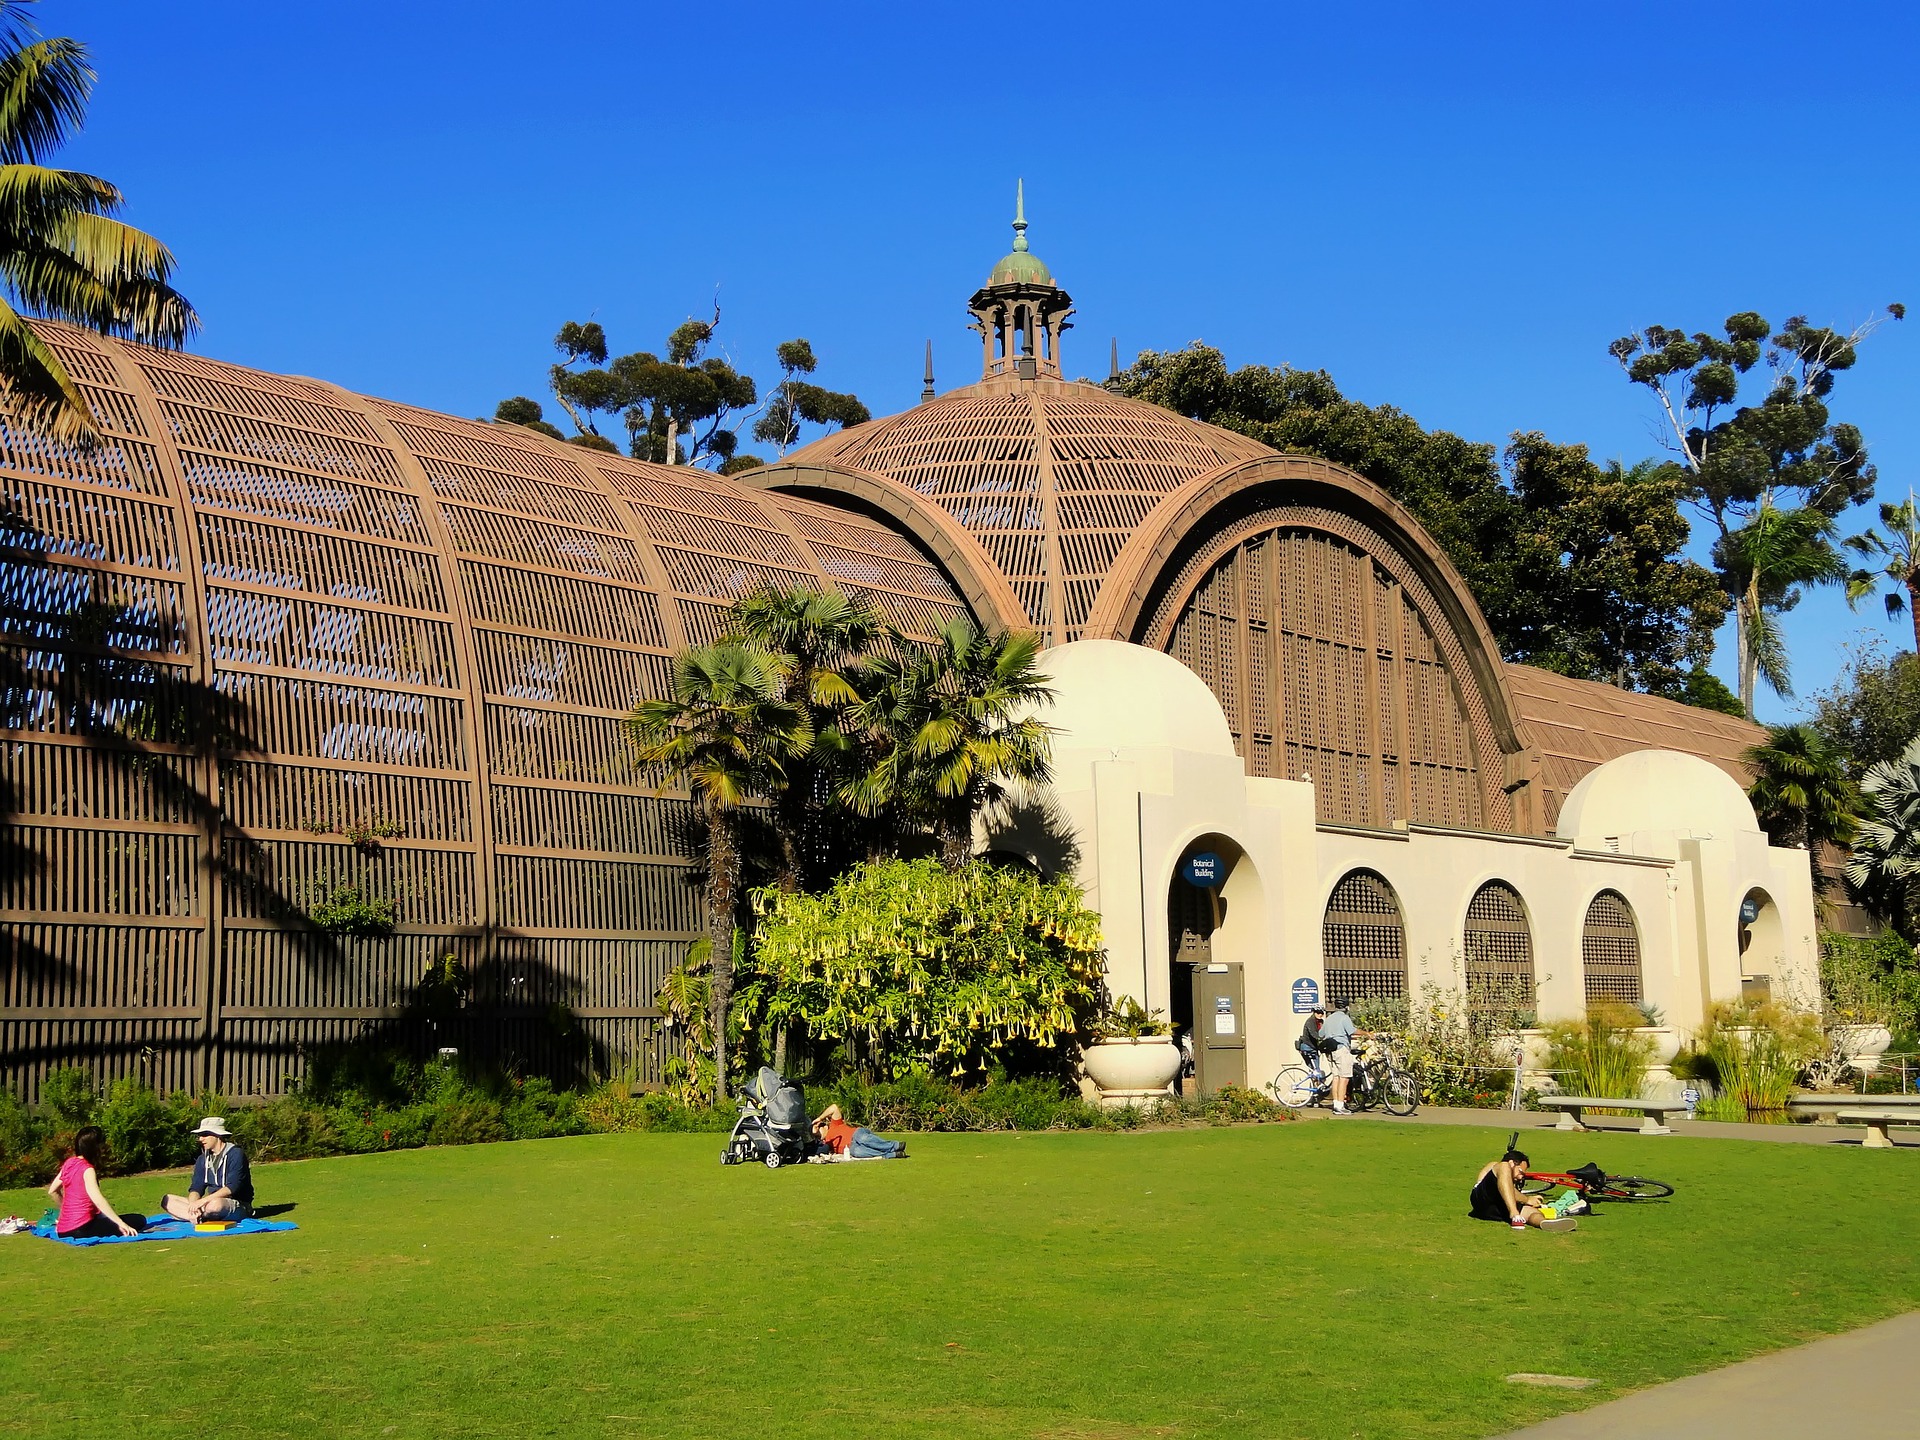 Park in San Diego, California